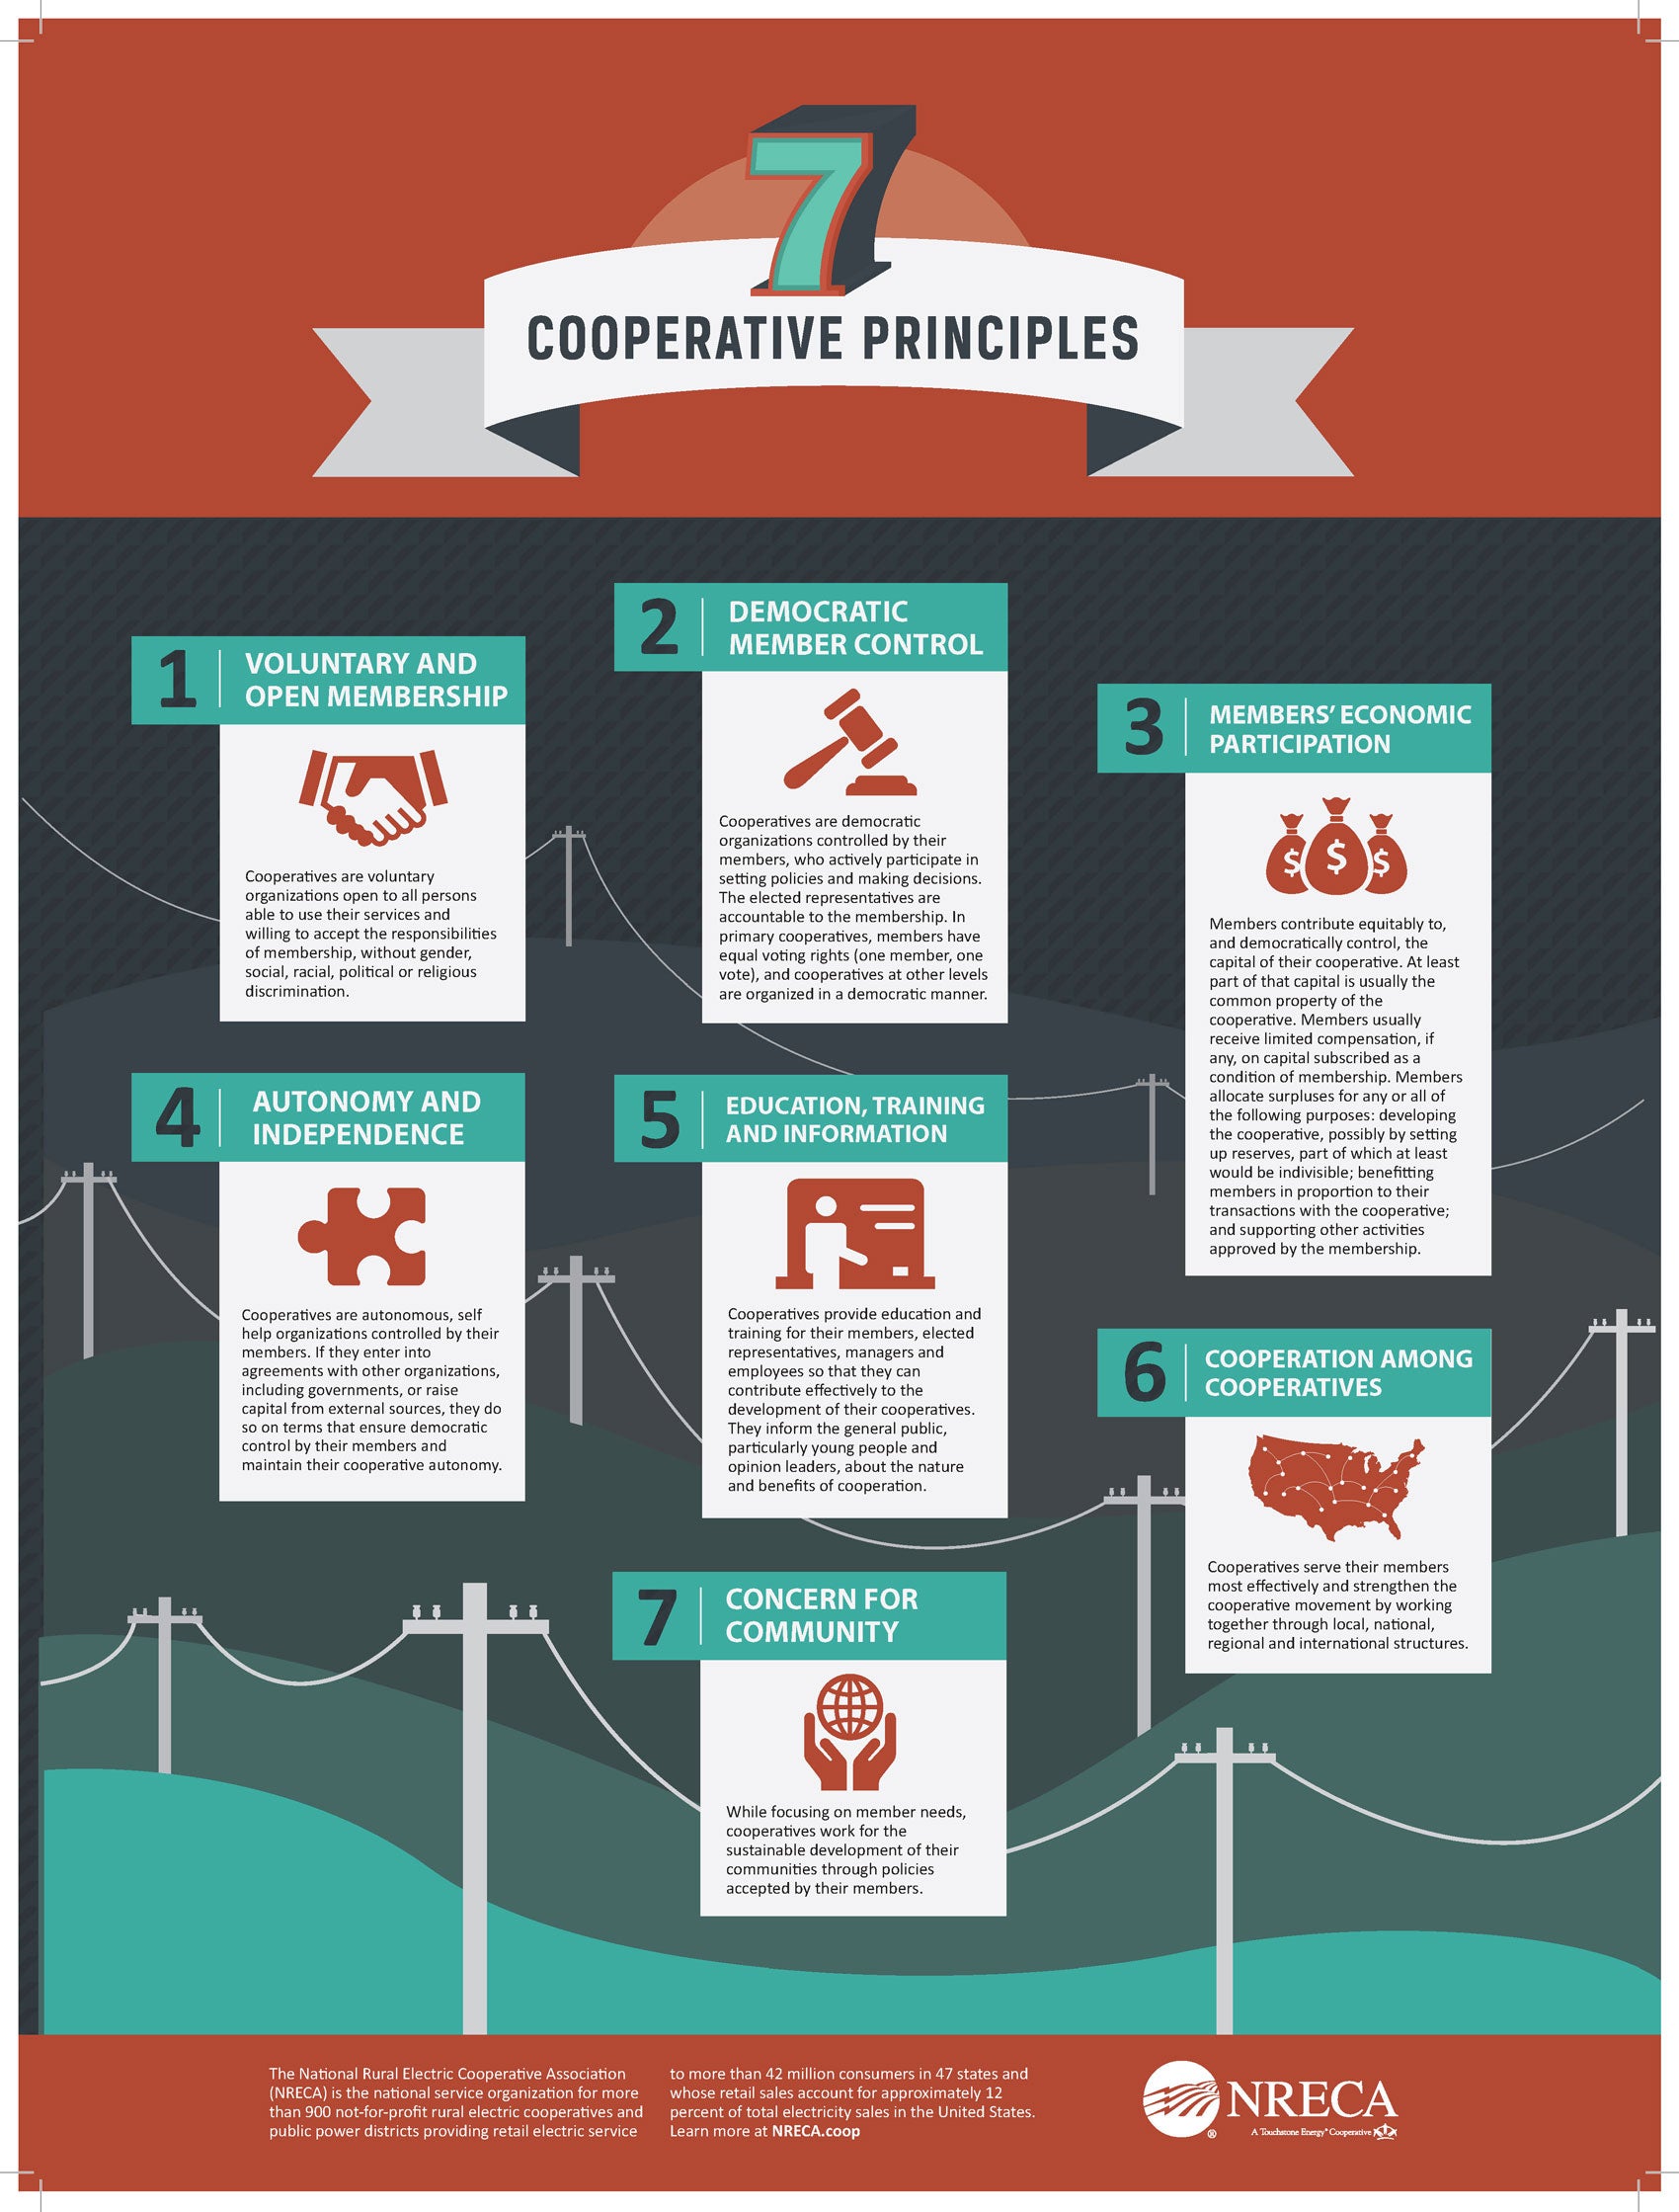 7_Coop_Principles_Infographic-resize.jpg